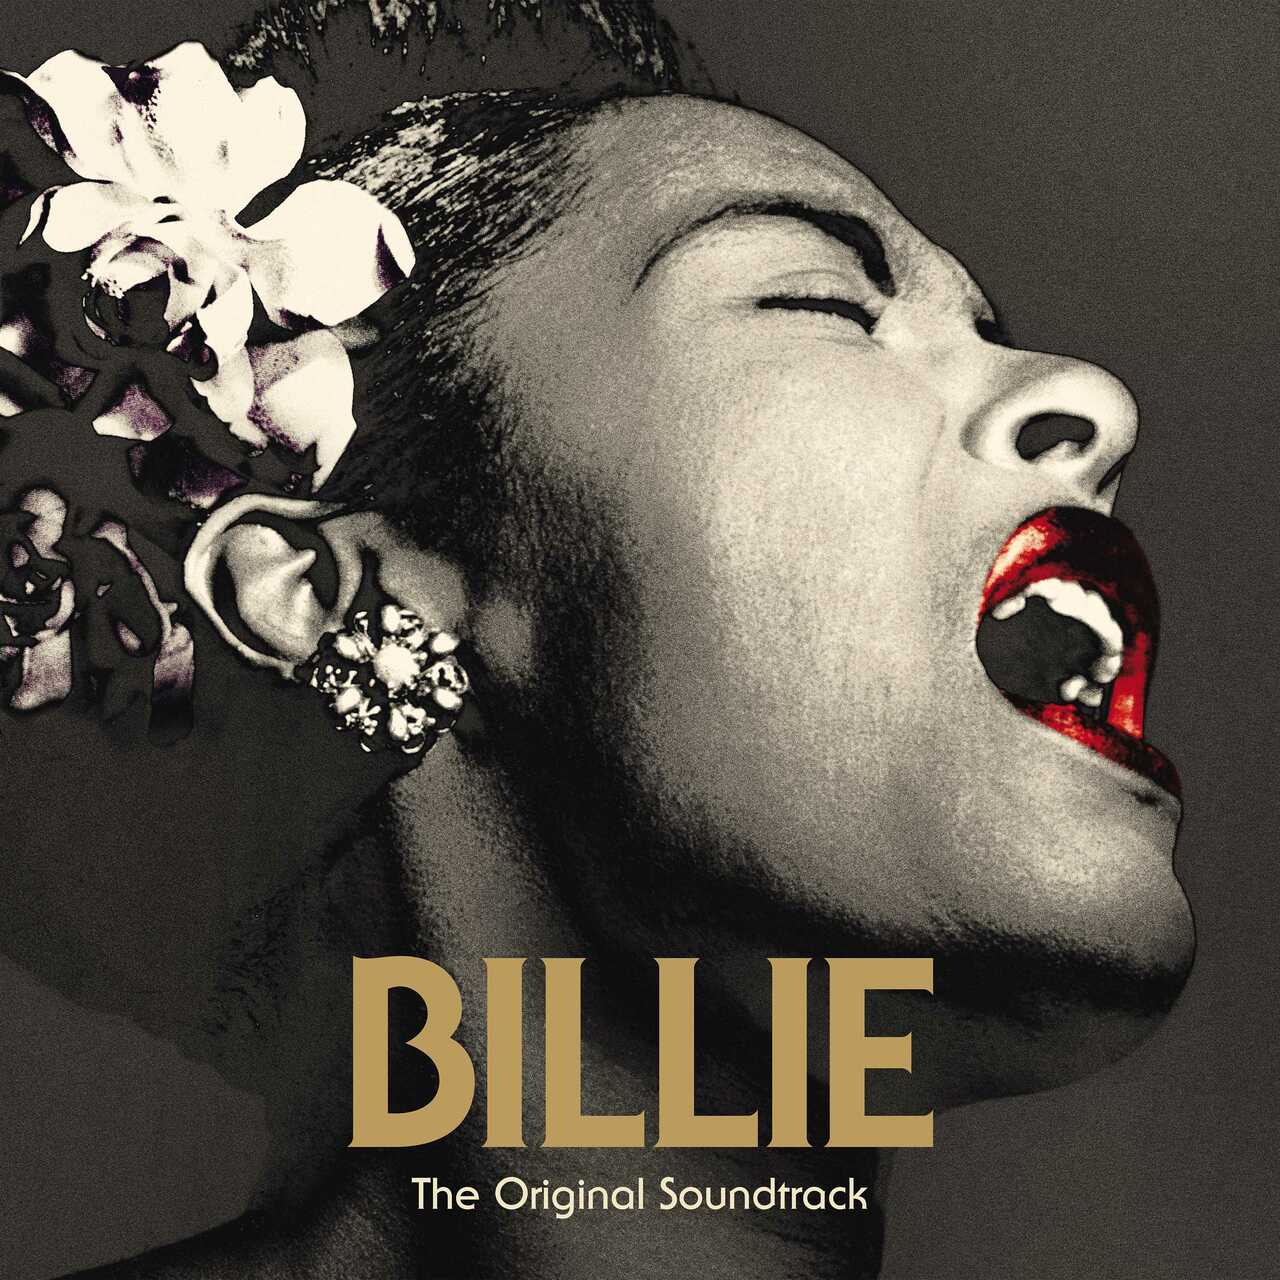 Kamp tin Vend om Billie Holiday & The Sonhouse Allstars - Billie OST LP NEW – Hi-Voltage  Records